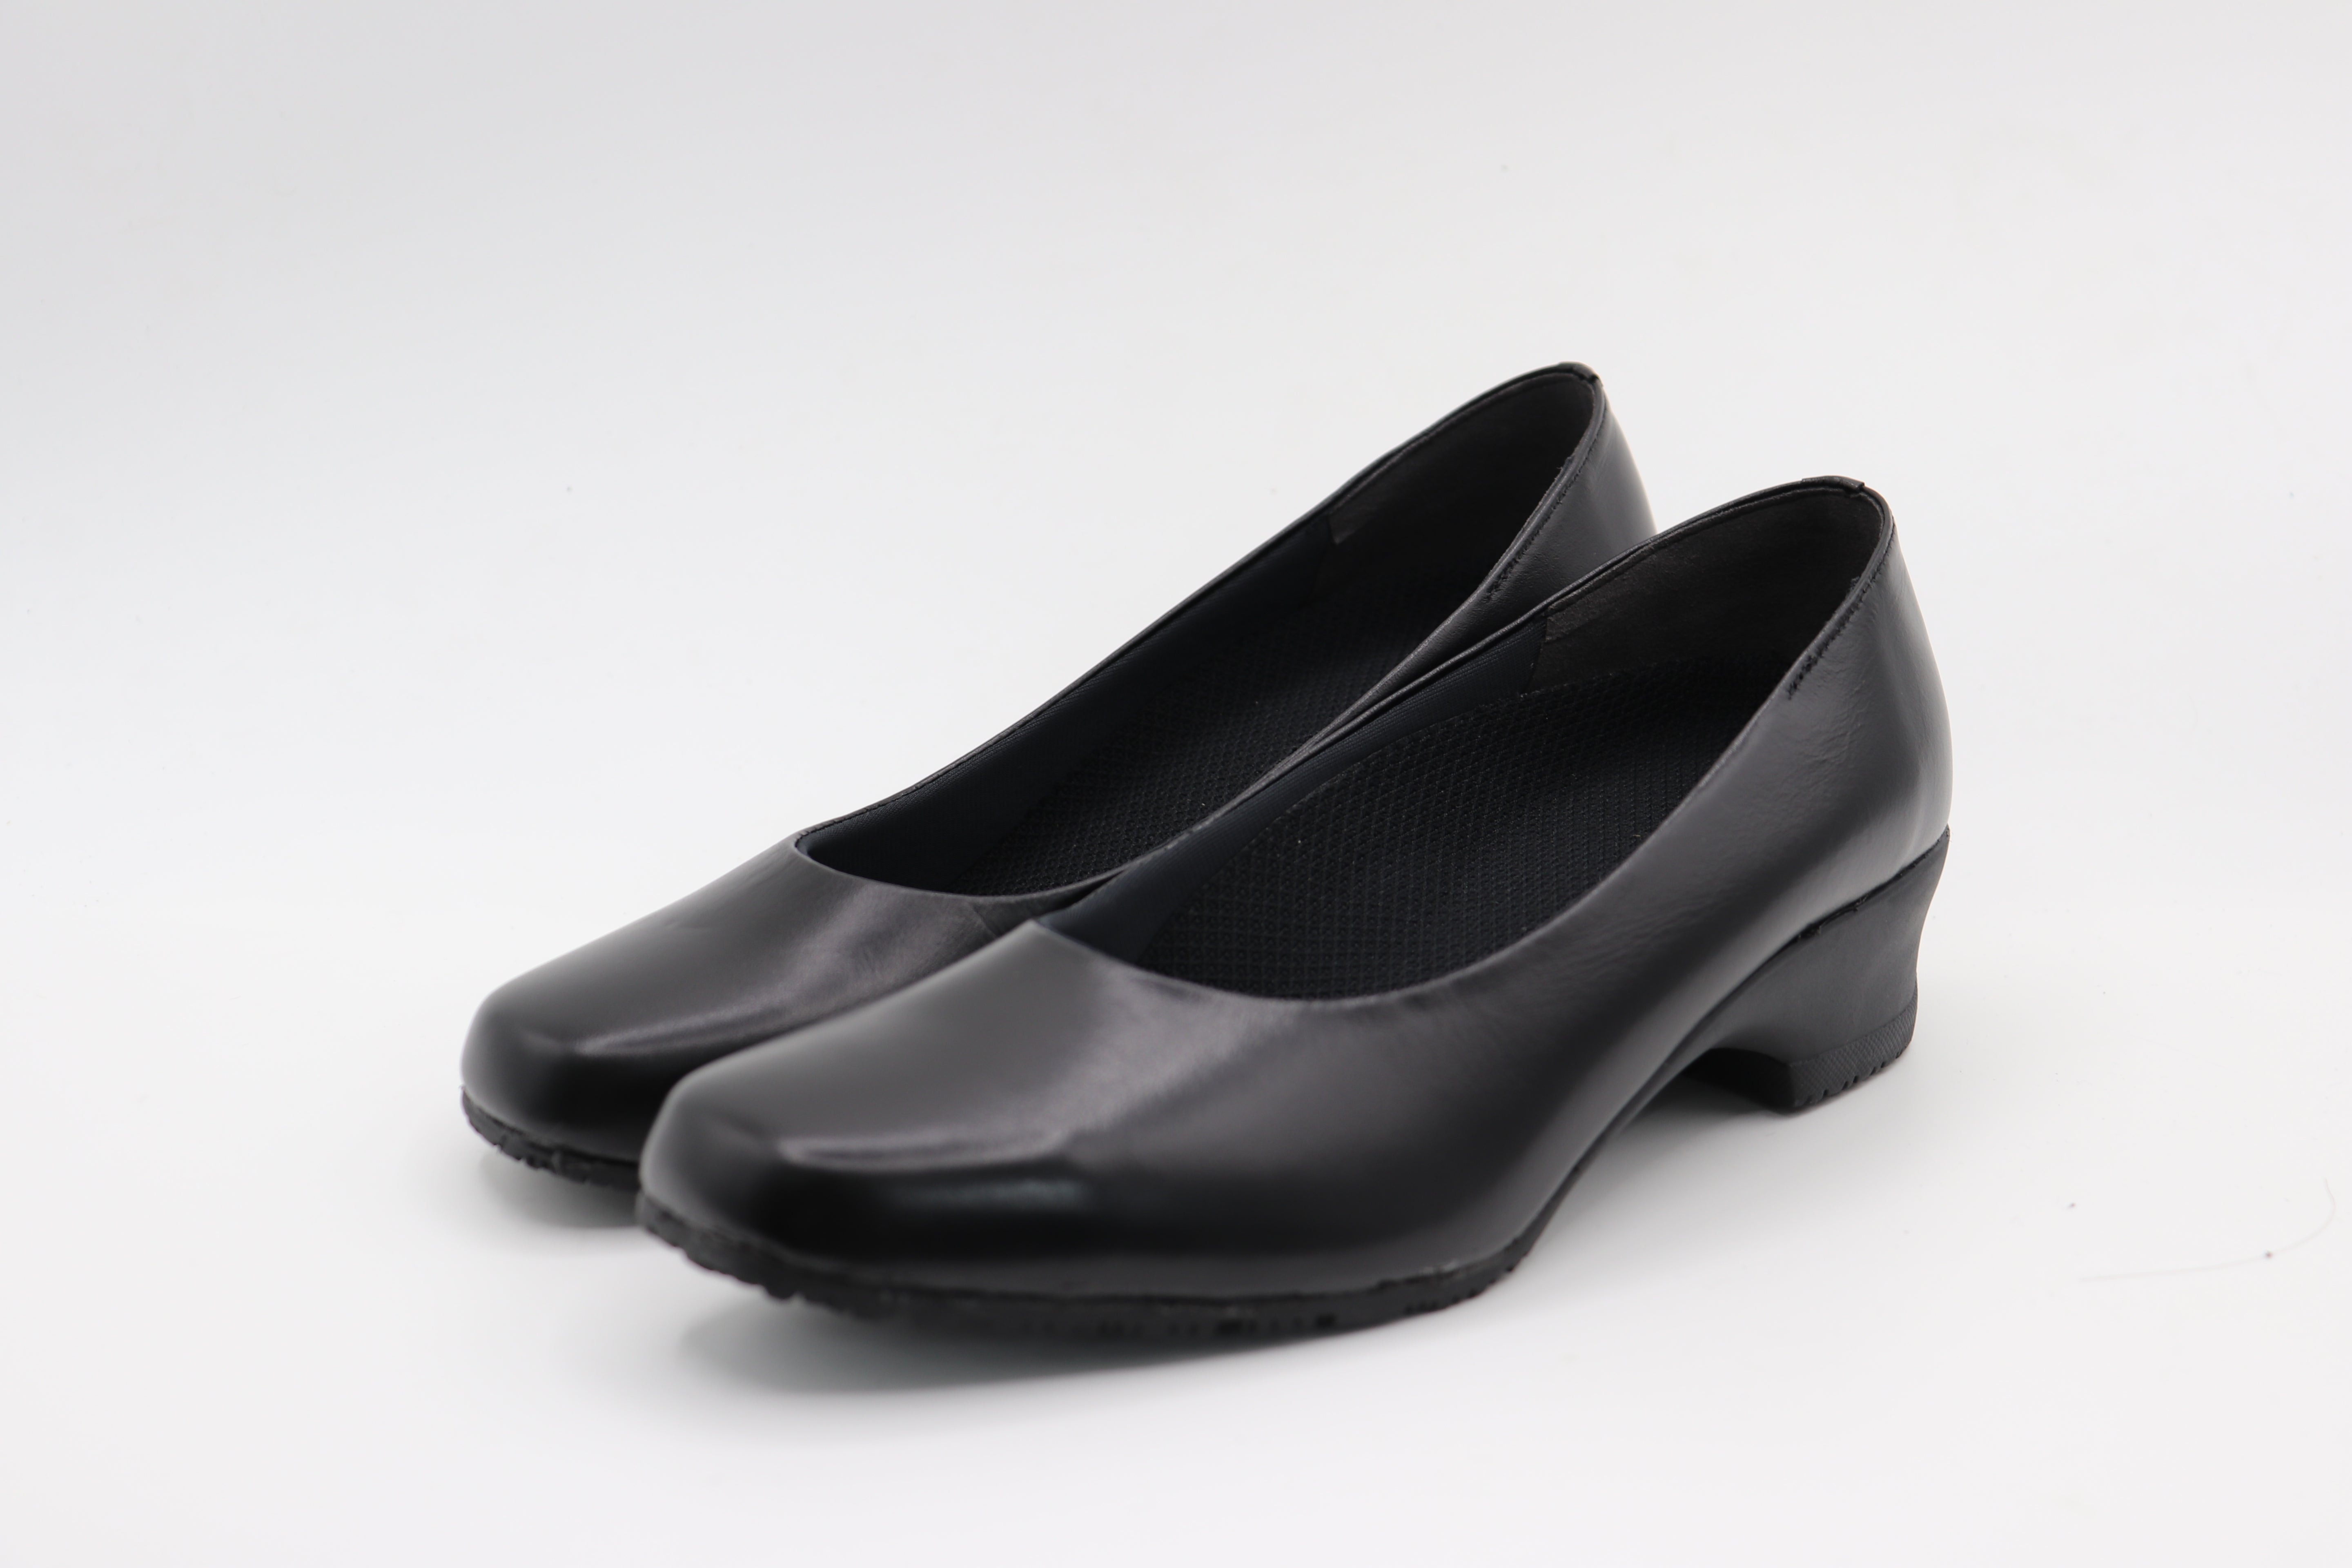 [Nous marchons a' kobe] パンプス 本革 ブラック レザー 婦人靴 日本製 お出かけ 通勤 歩きやすい 4E 22.5cm-24.5cm 歩きやすい カジュアル 幅広 靴 シューズ レディース No.100 ブラック